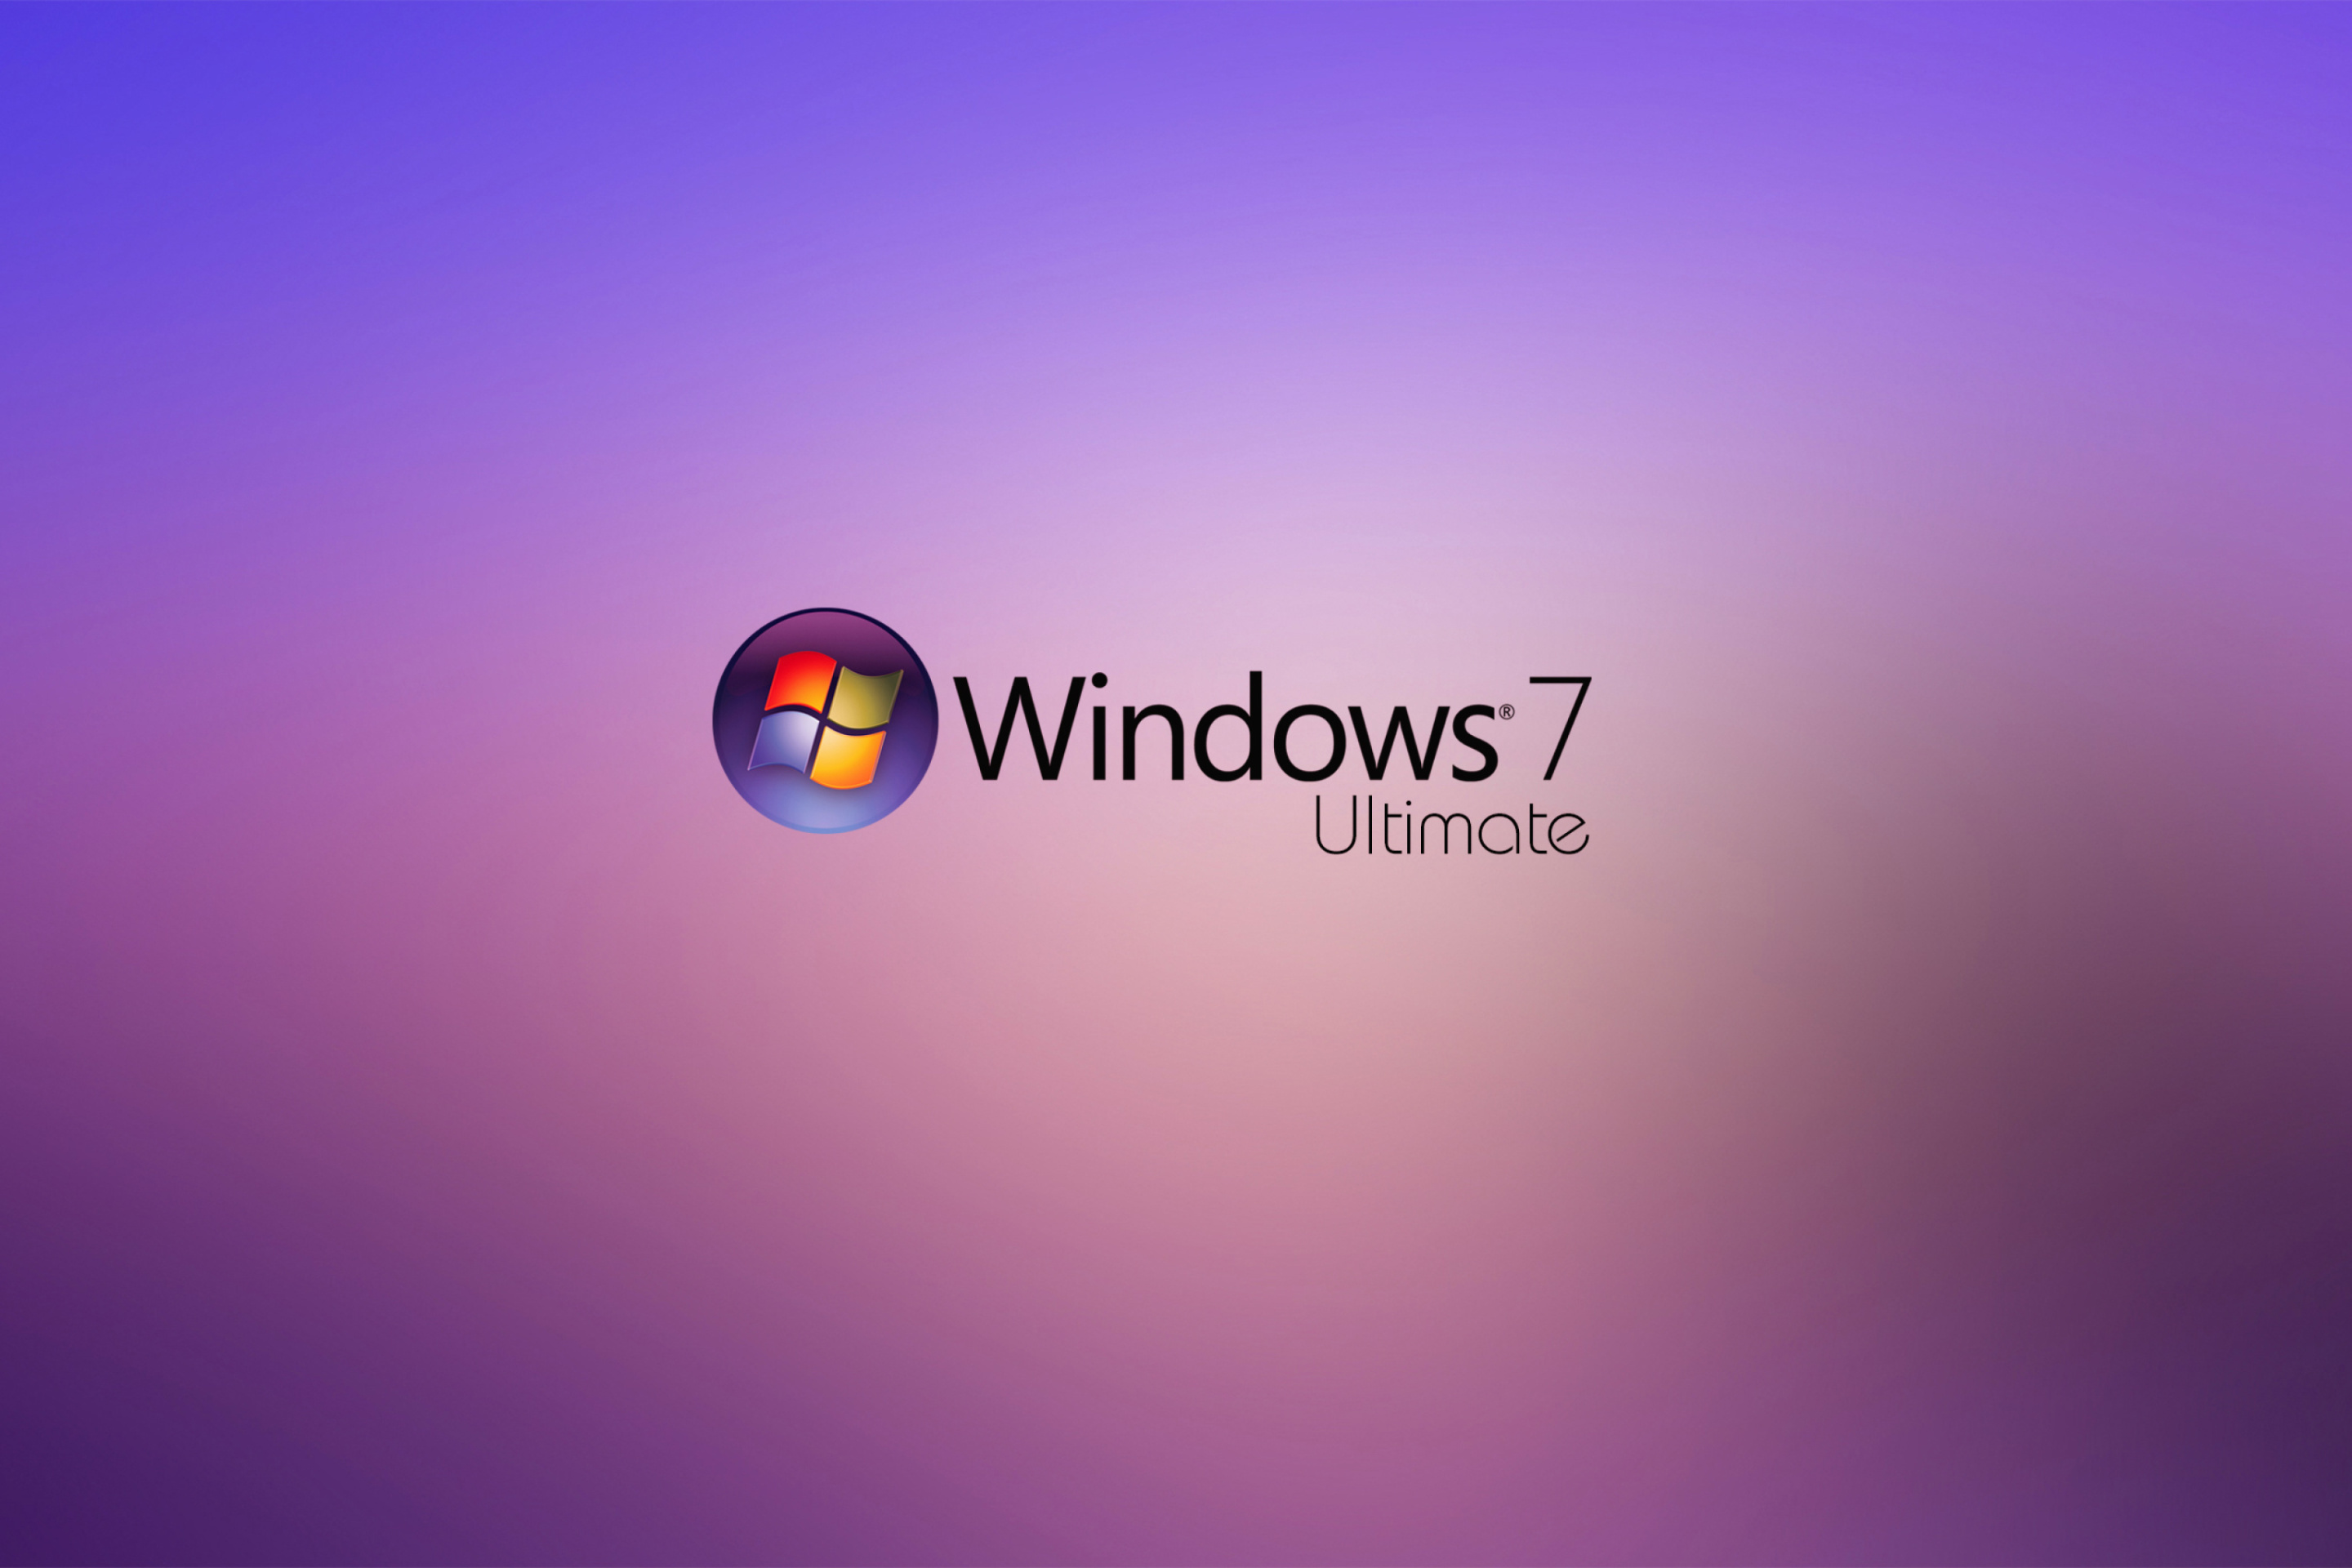 Windows 7 Ultimate wallpaper 2880x1920